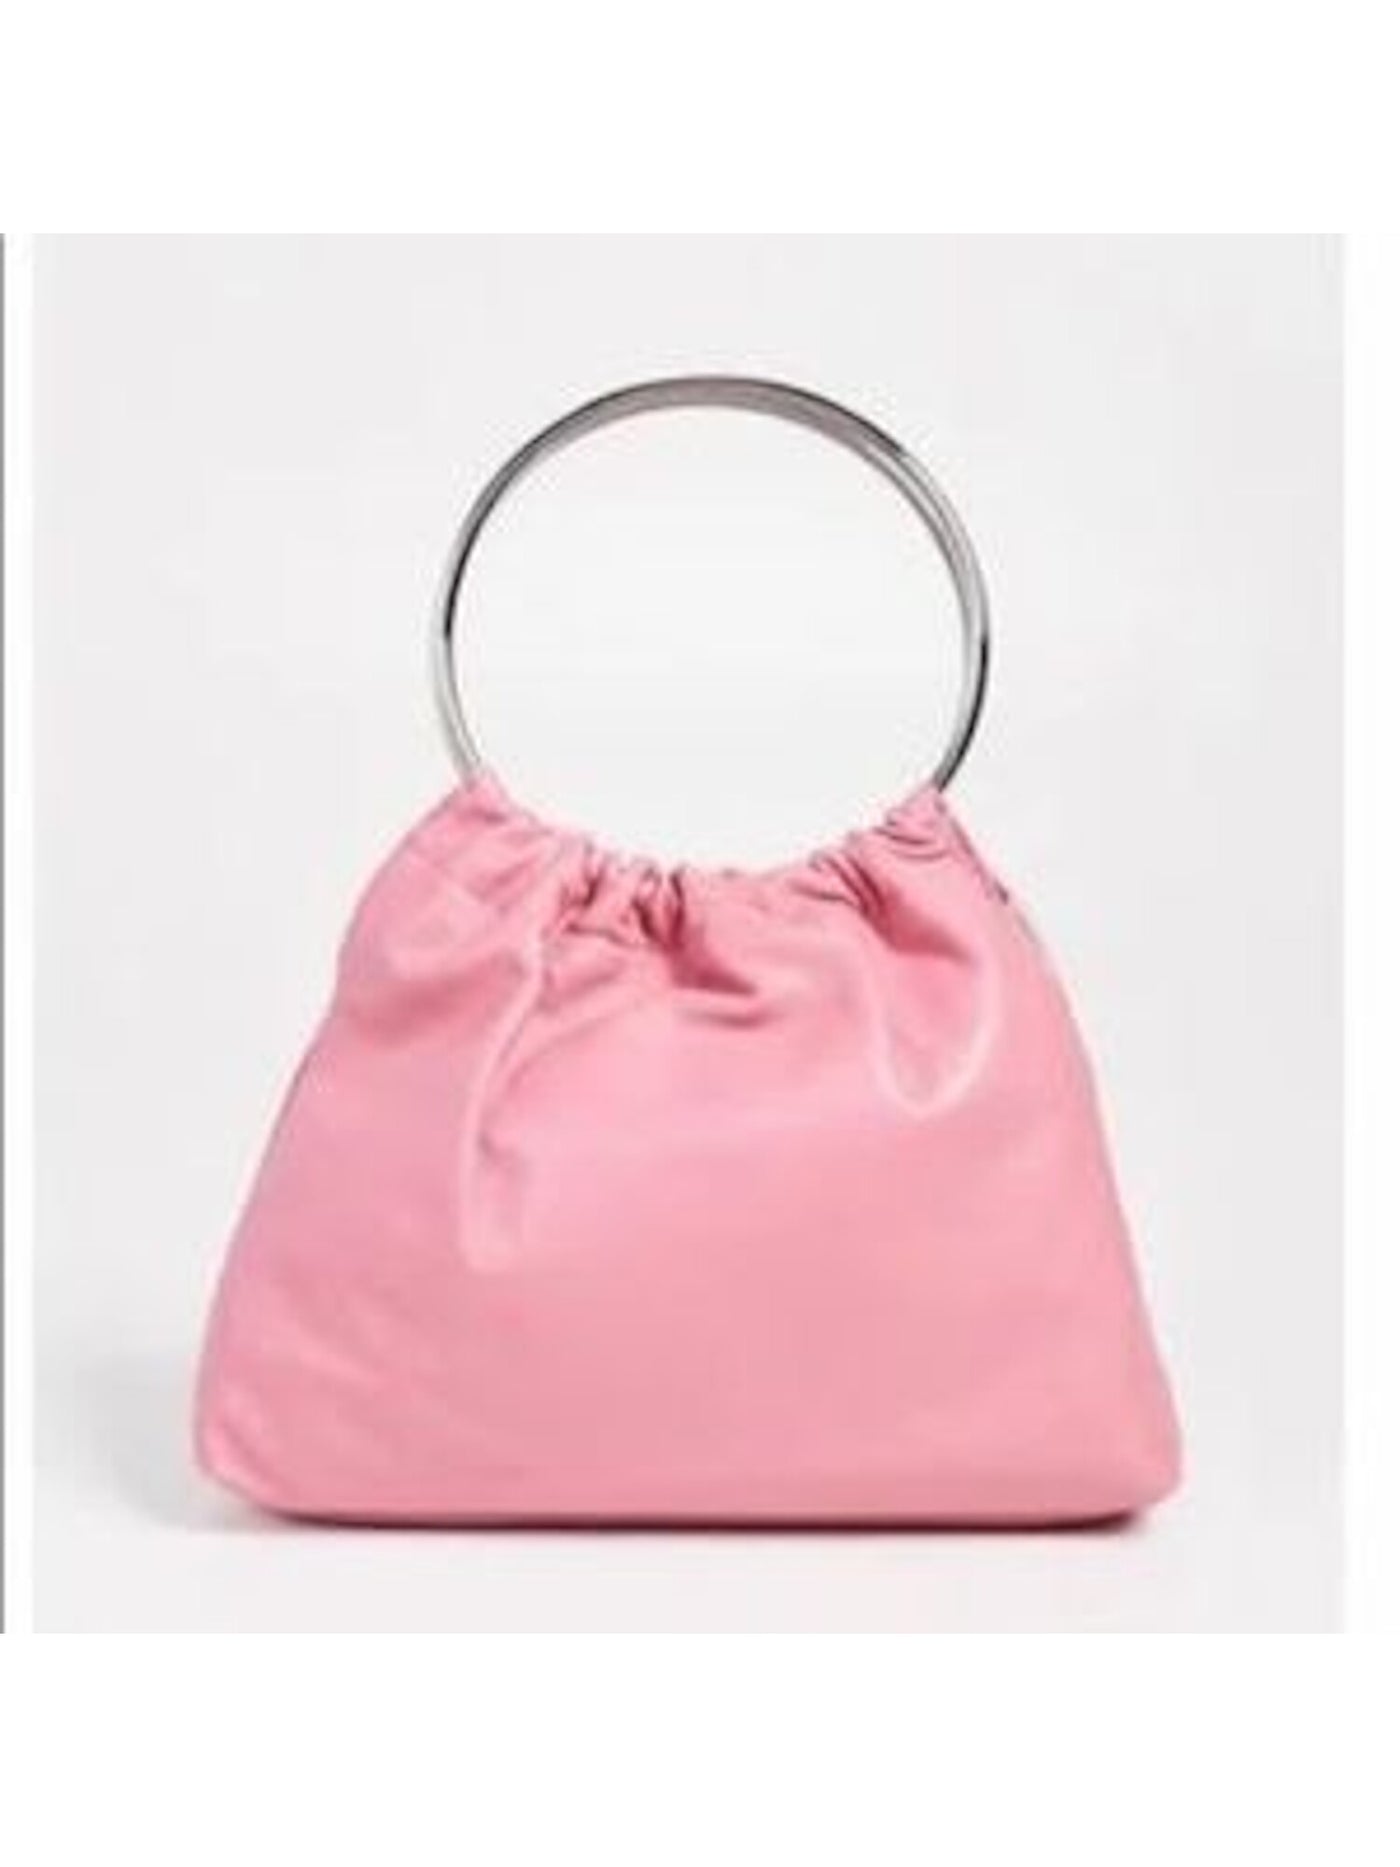 Little Liffner Women's Pink Leather Double Flat Strap Hobo Handbag Purse